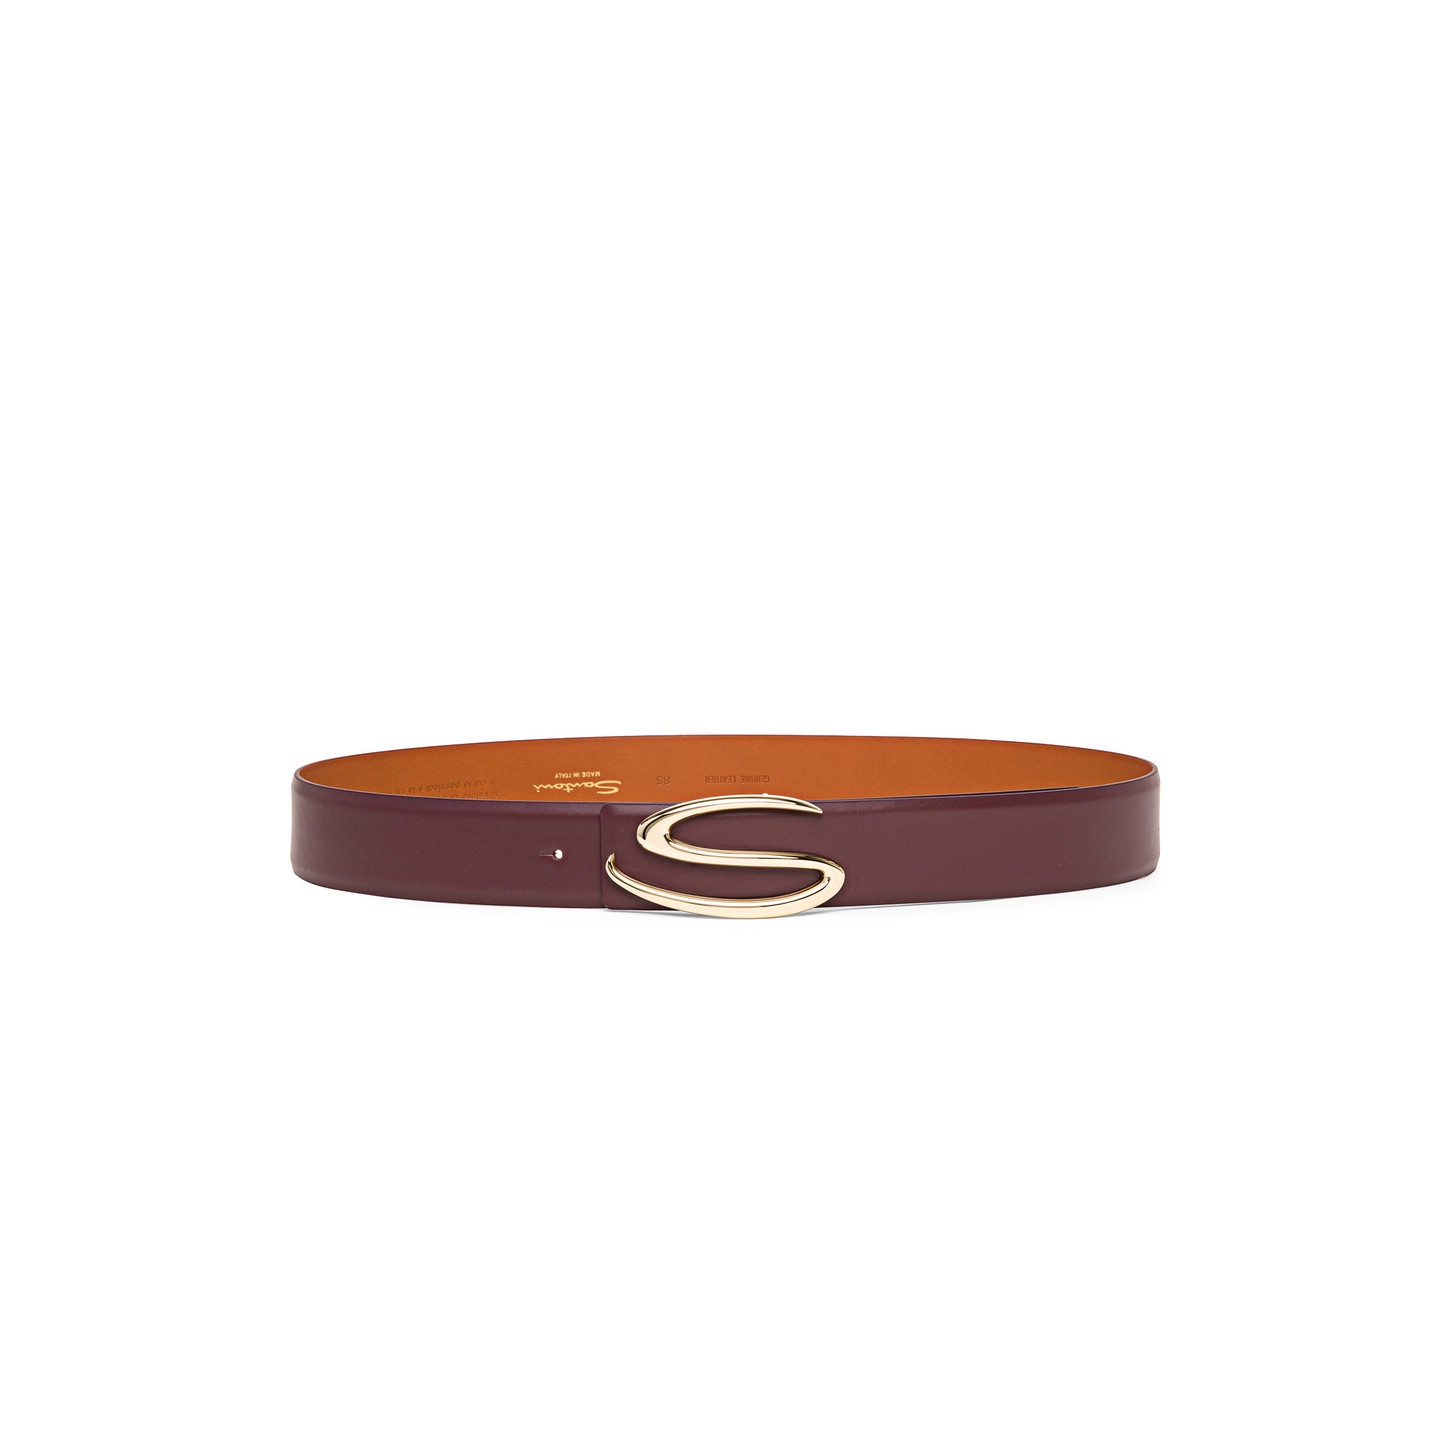 Burgundy leather belt strap - 2